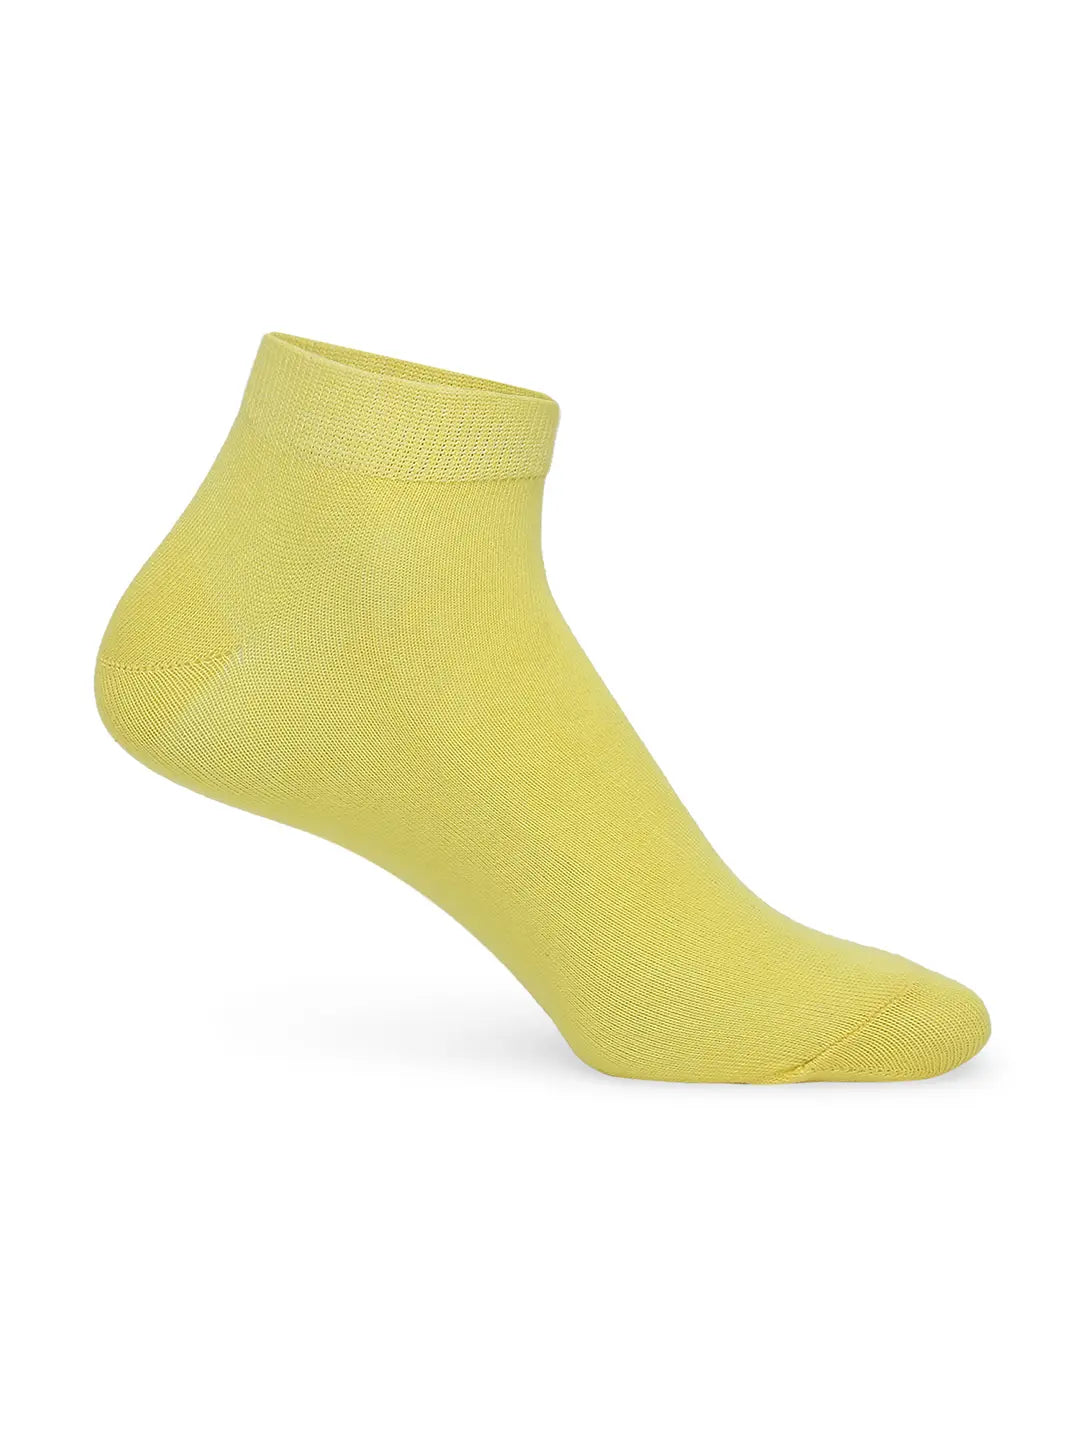 Men Olive & Yellow Cotton Blend Sneaker Socks - Pack Of 2 - Underjeans by Spykar